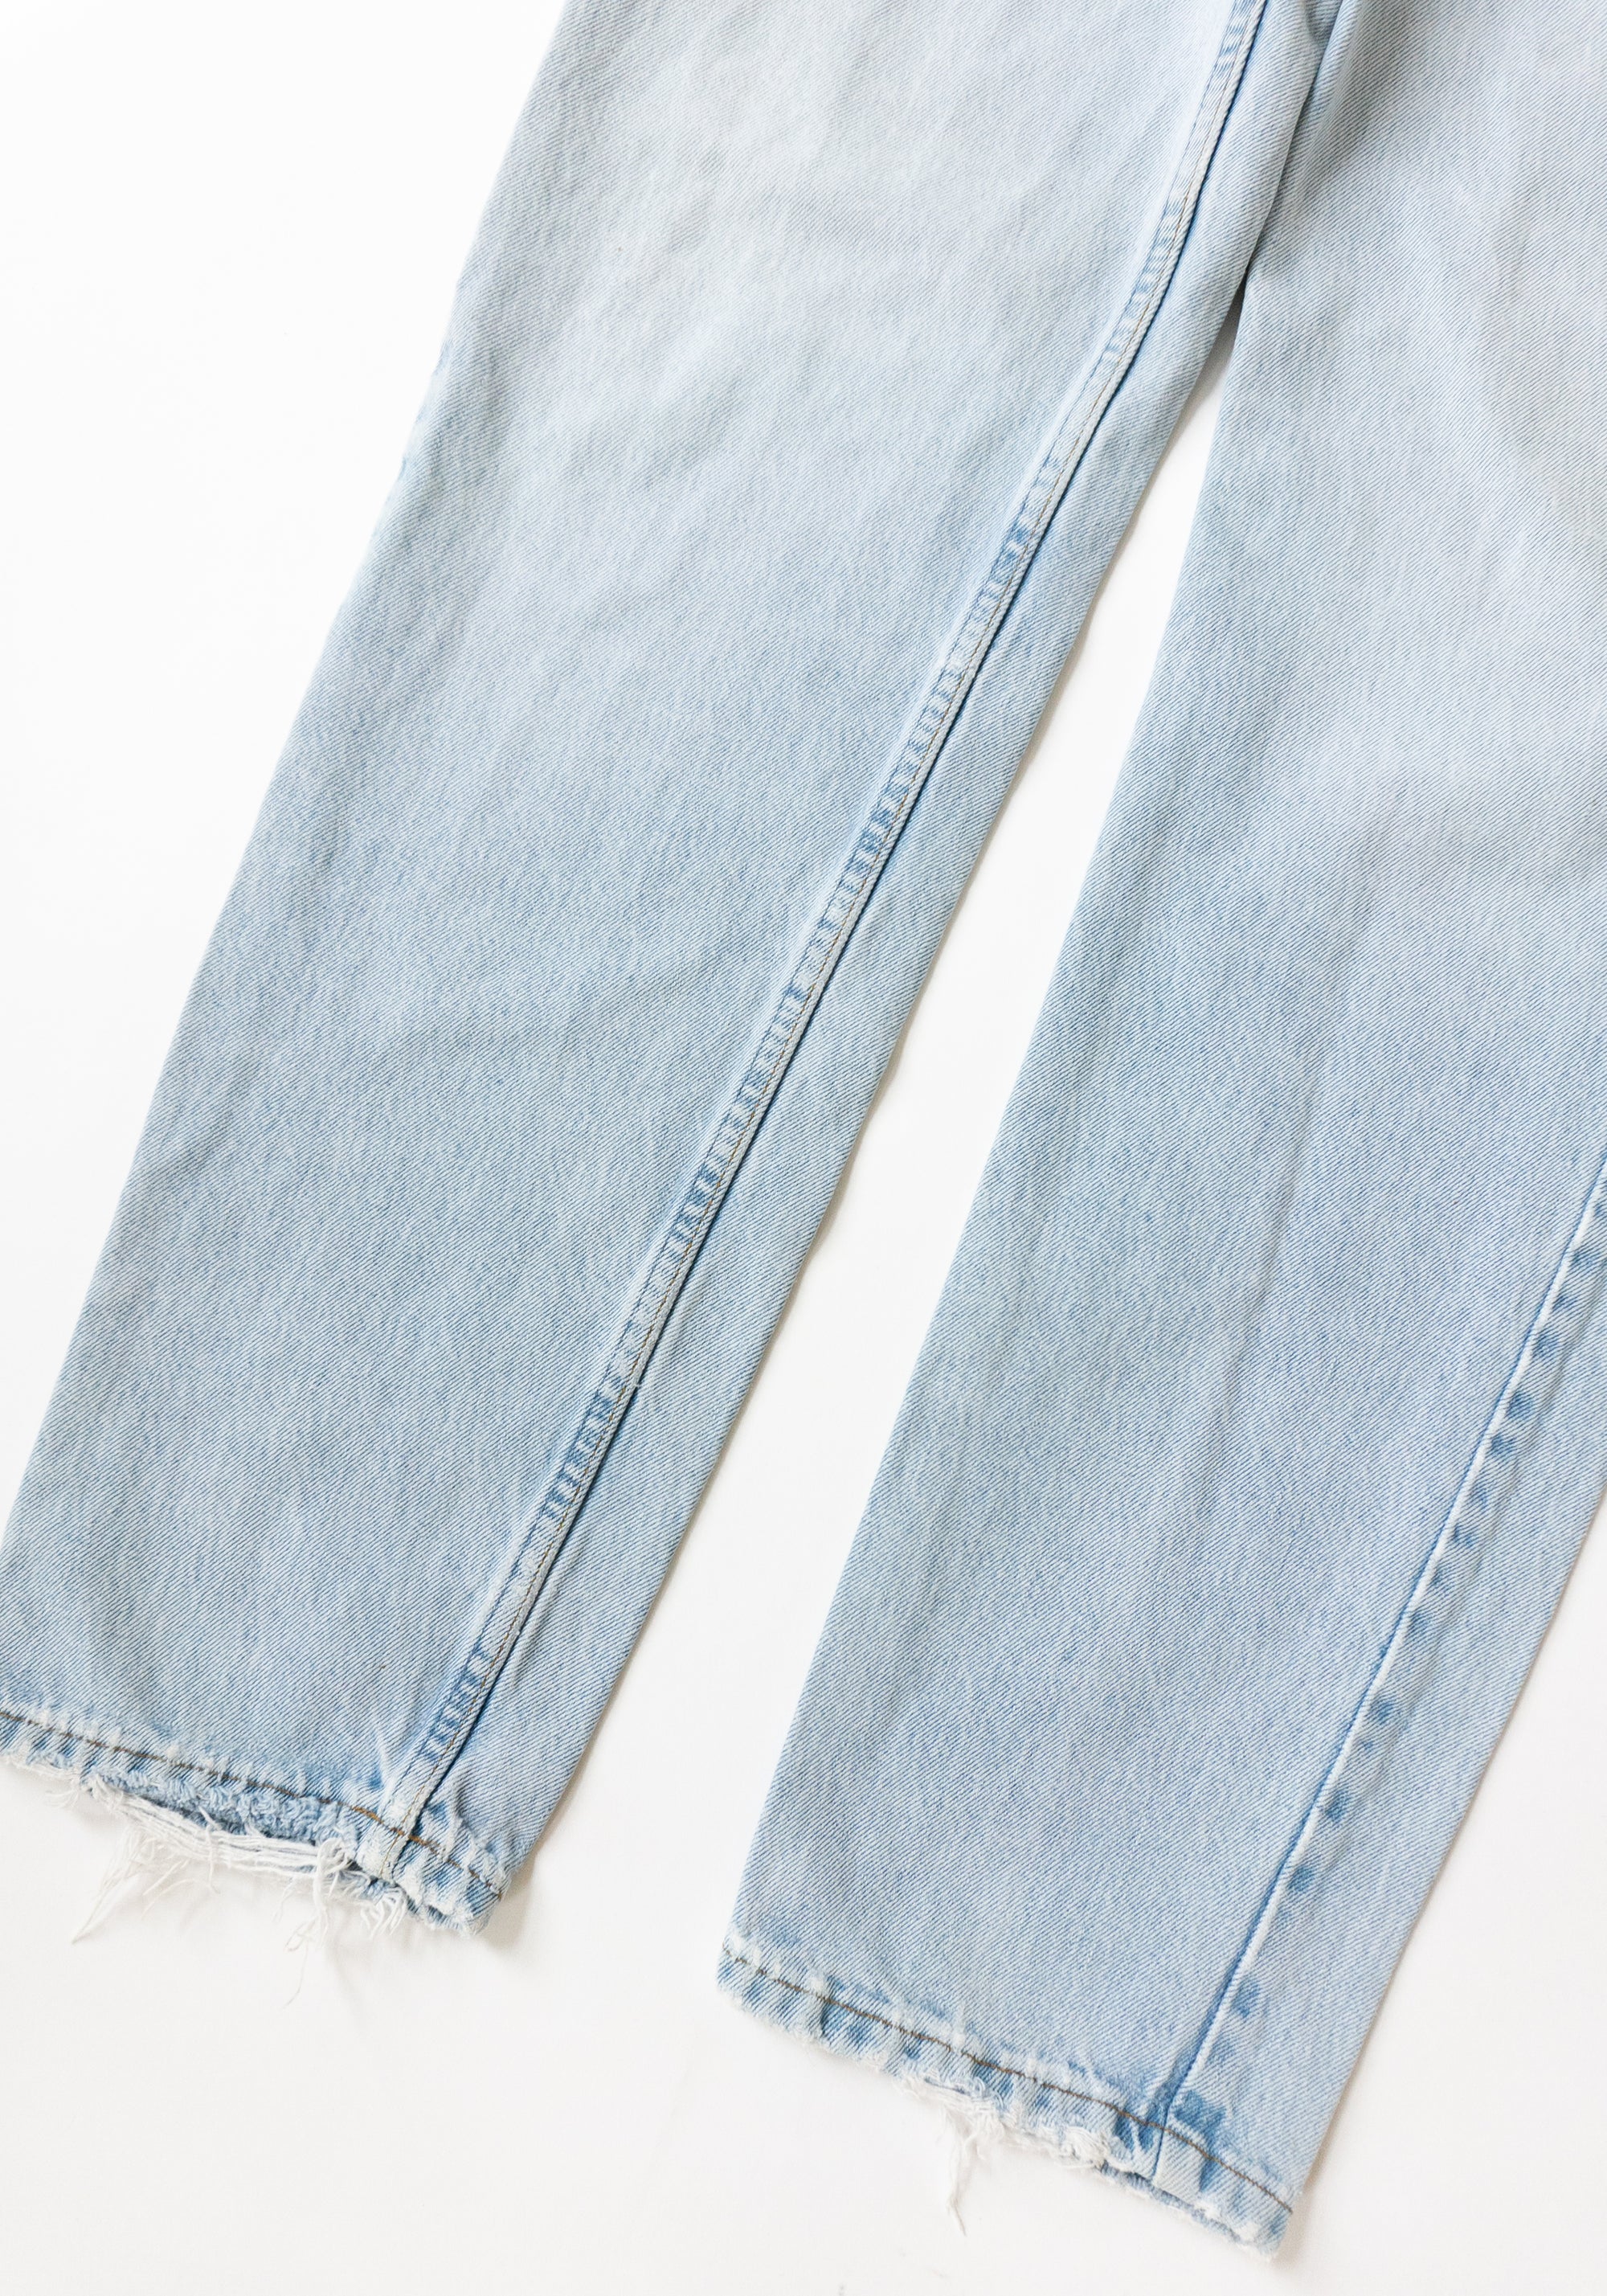 Vintage 90s Gap Jeans